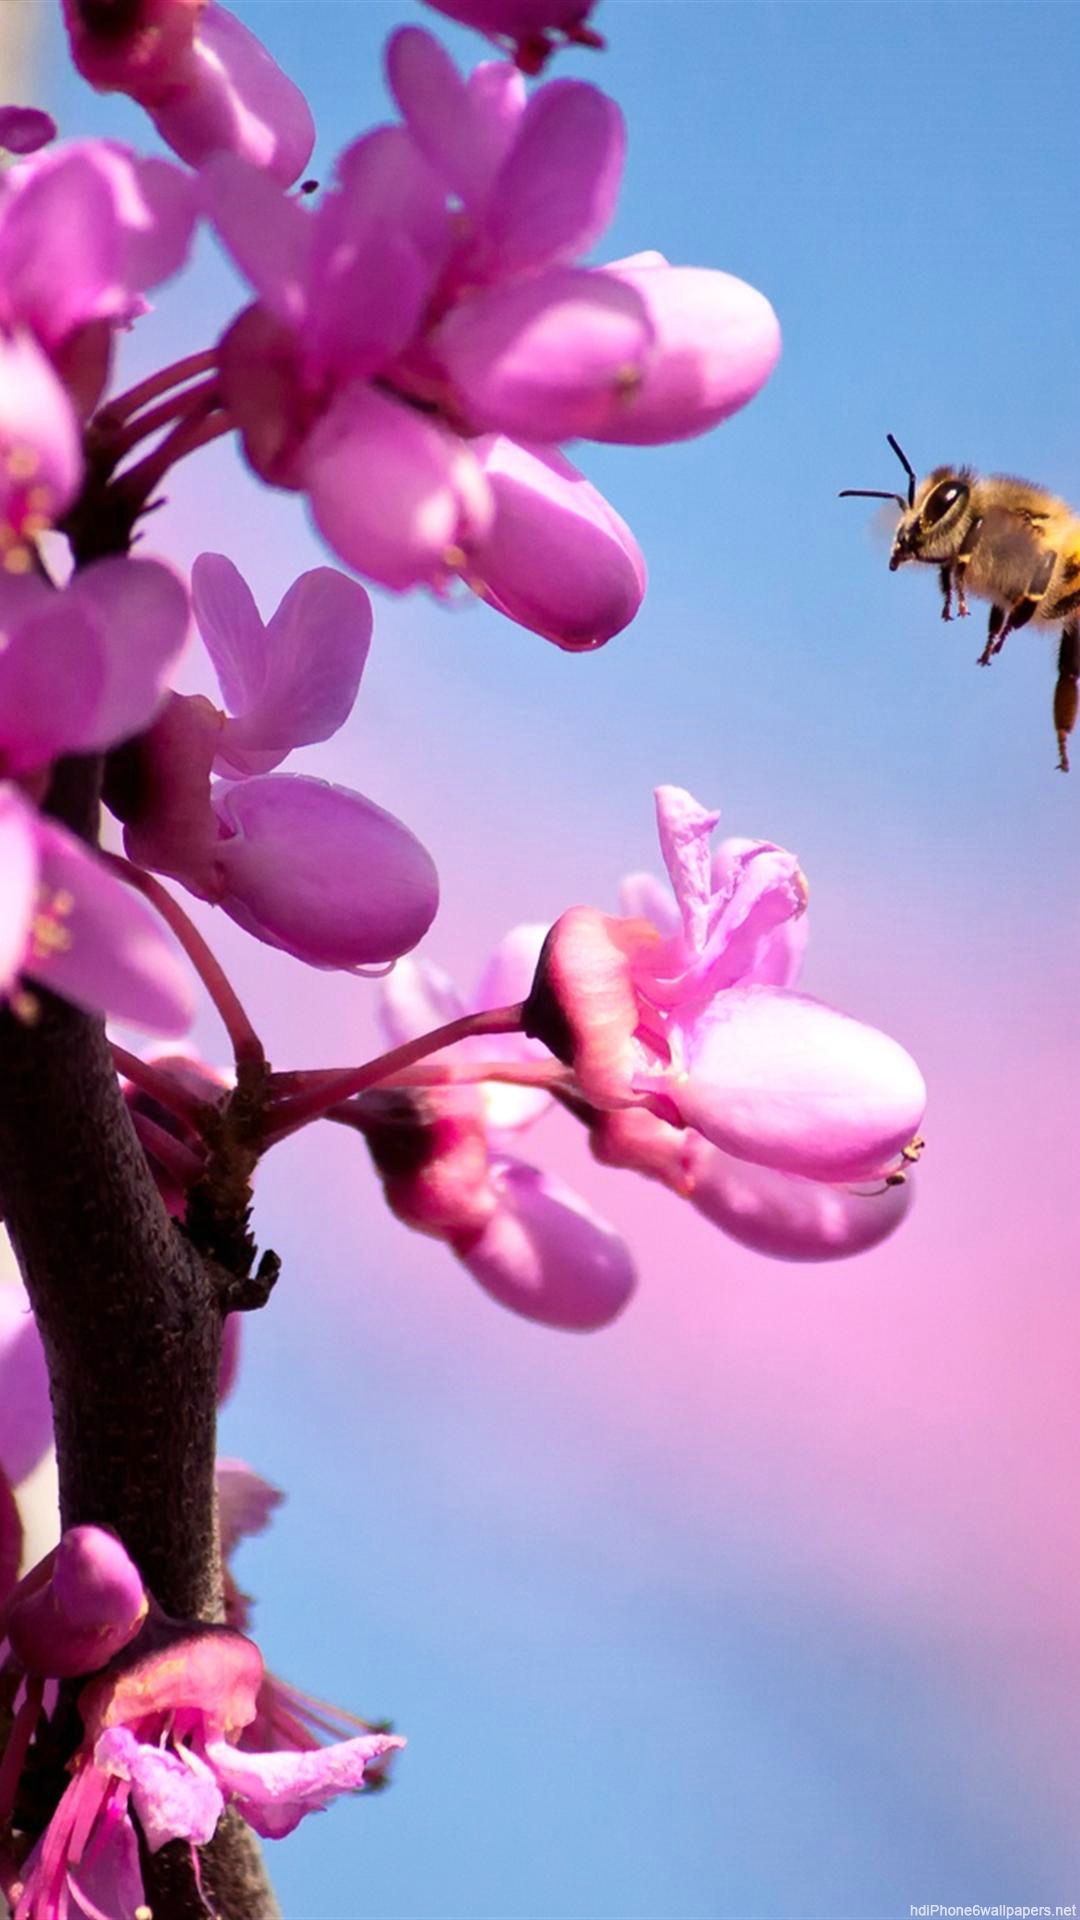 hd wallpaper für iphone 6 1080p,rosa,blume,blütenblatt,frühling,pflanze